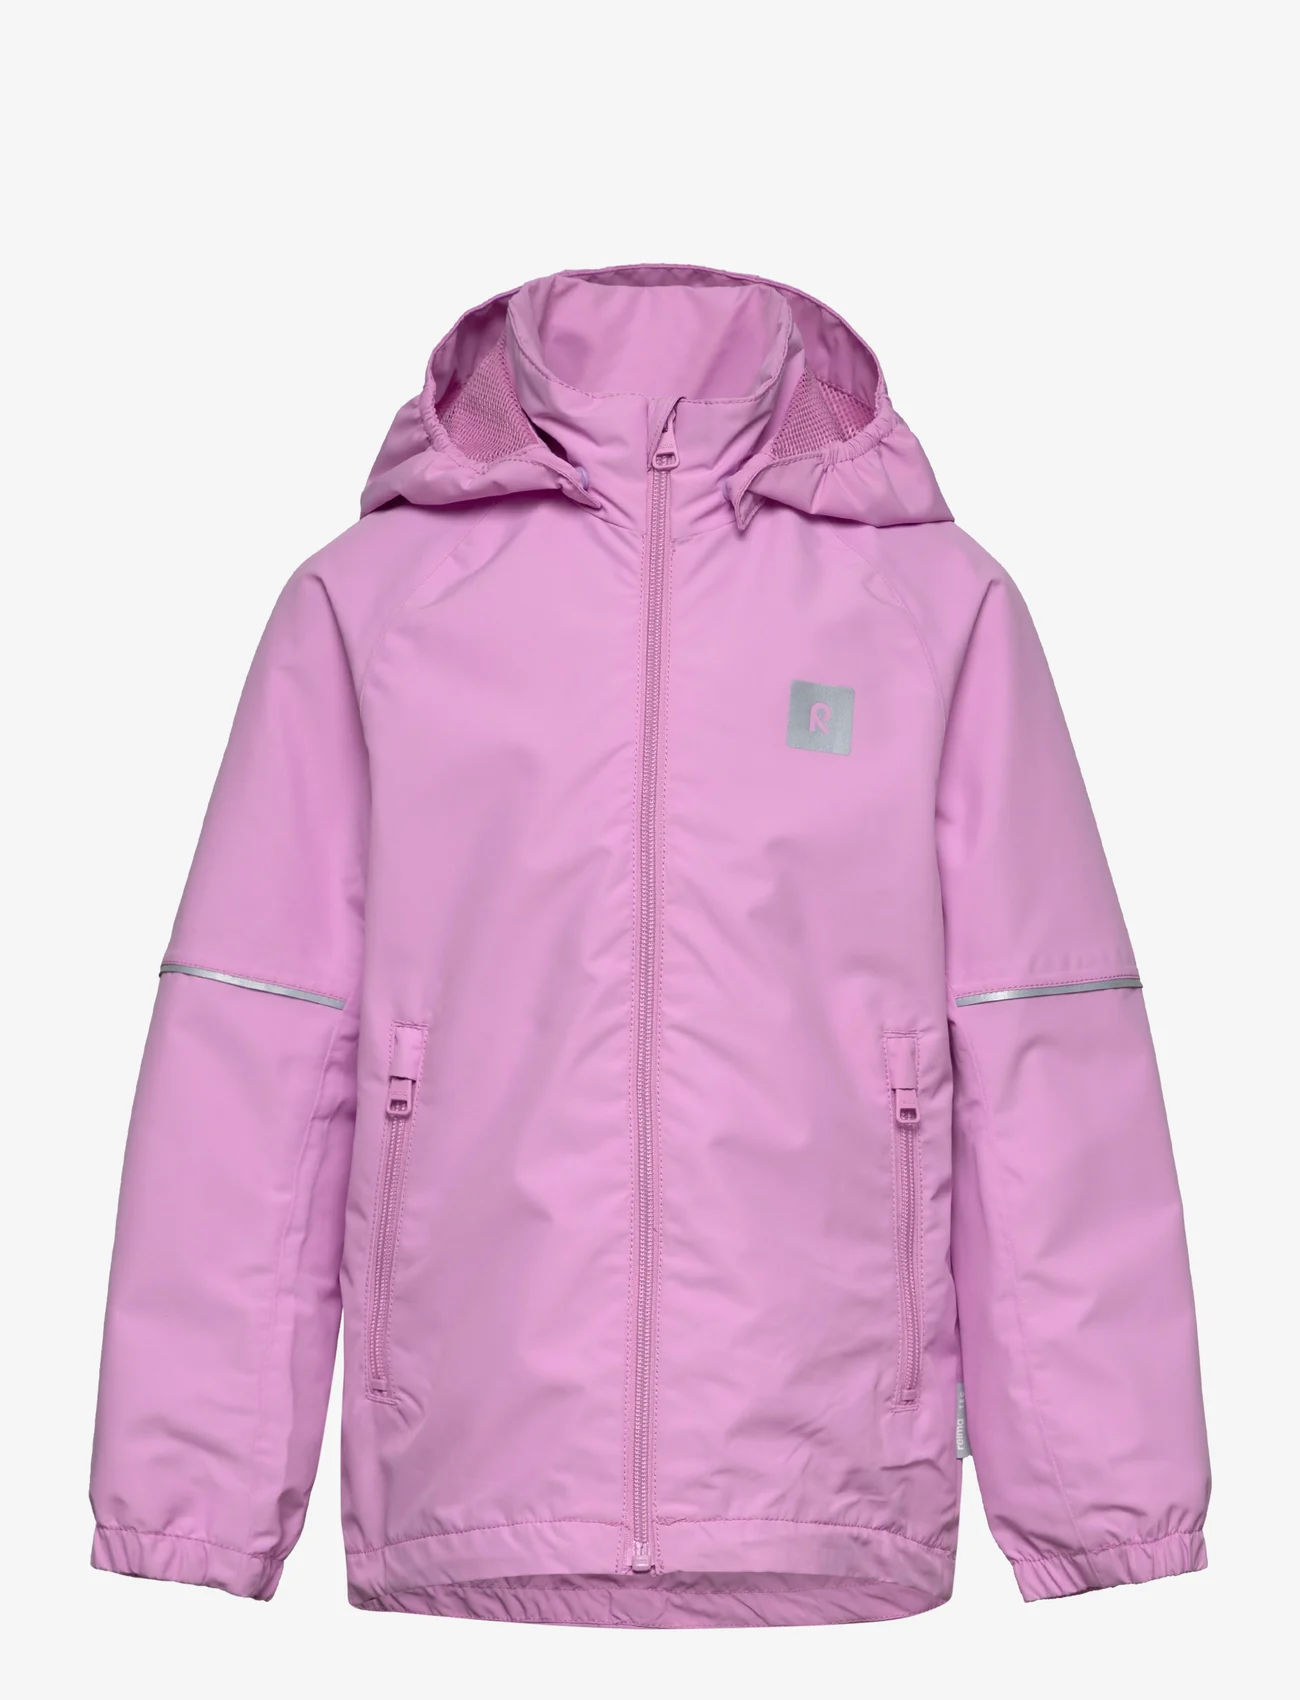 Reima - Reimatec jacket, Kallahti - spring jackets - lilac pink - 0